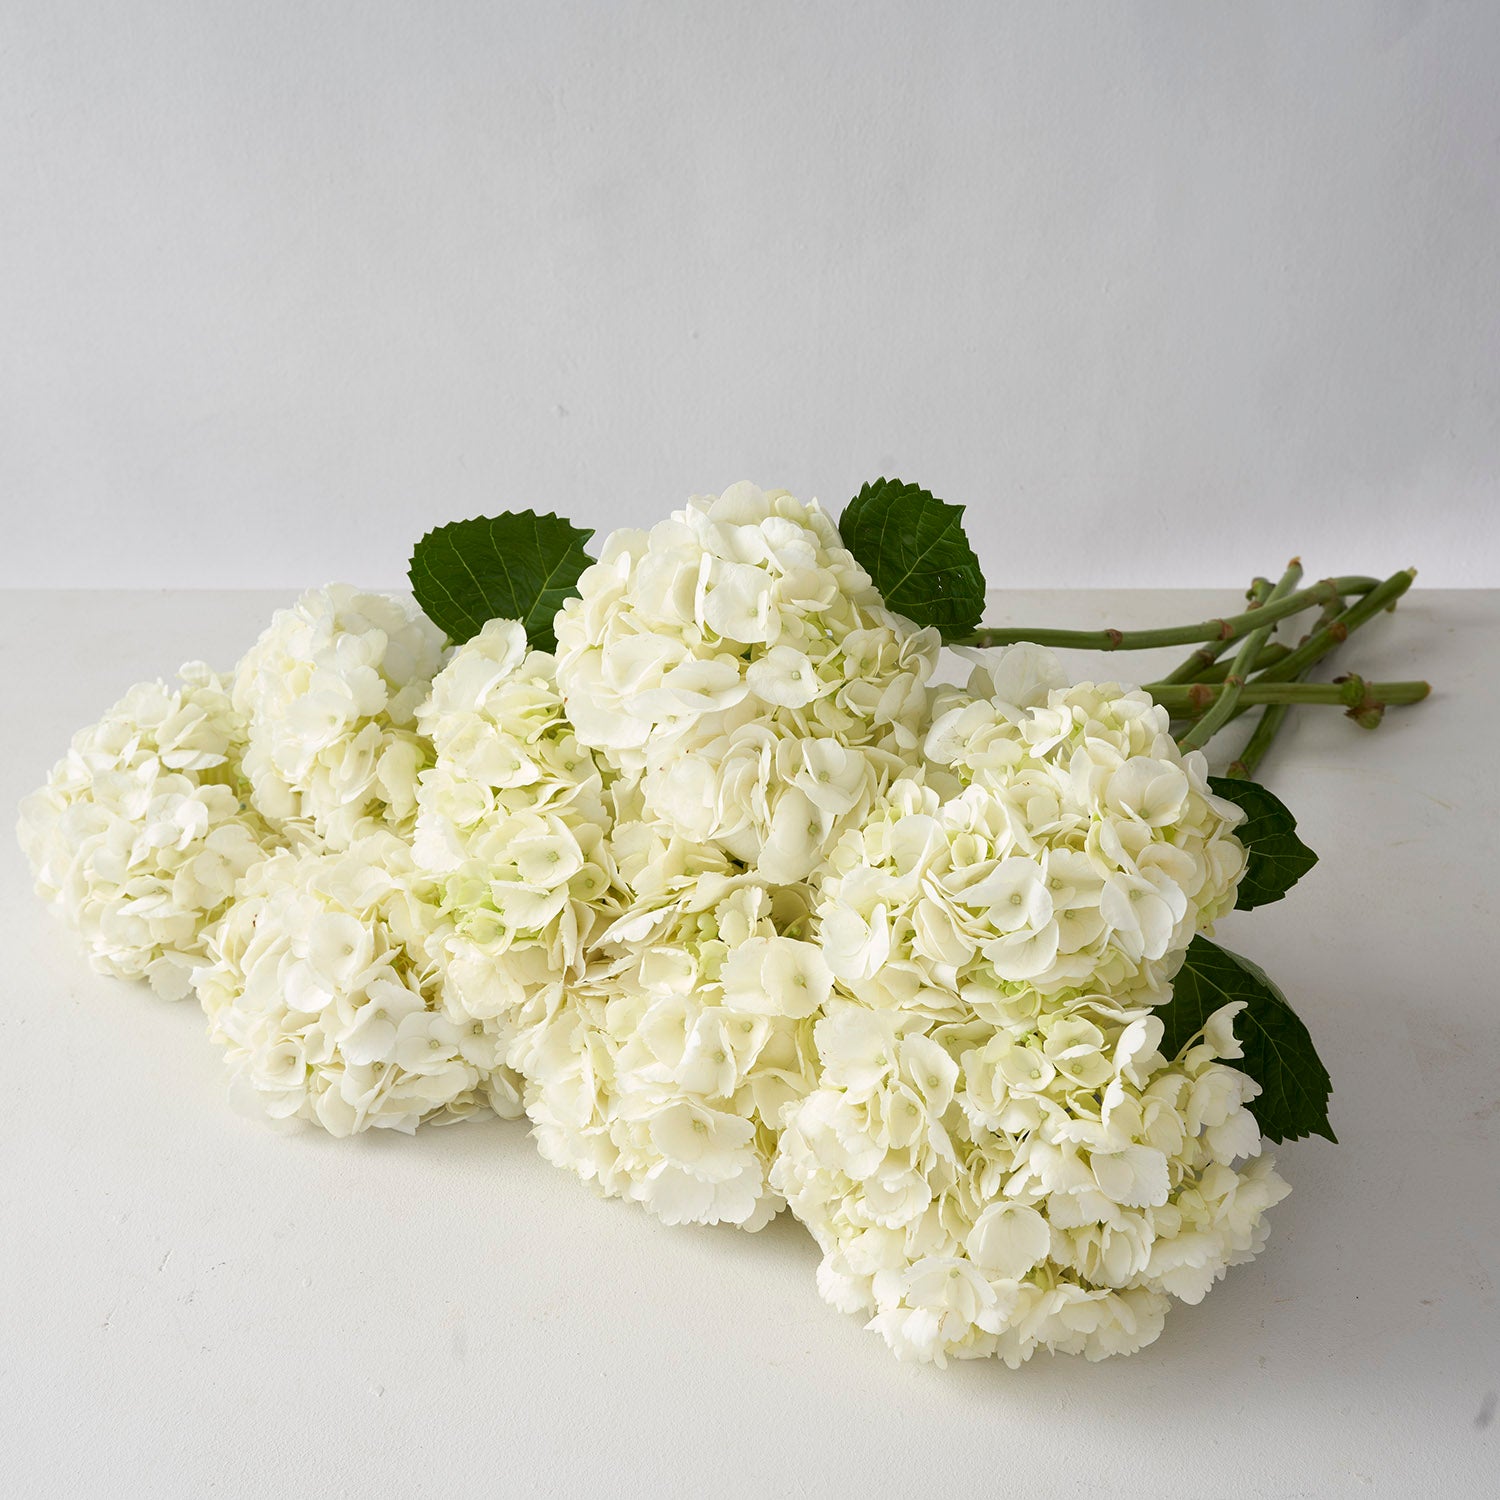 bouquet of white hydrangea on white background.